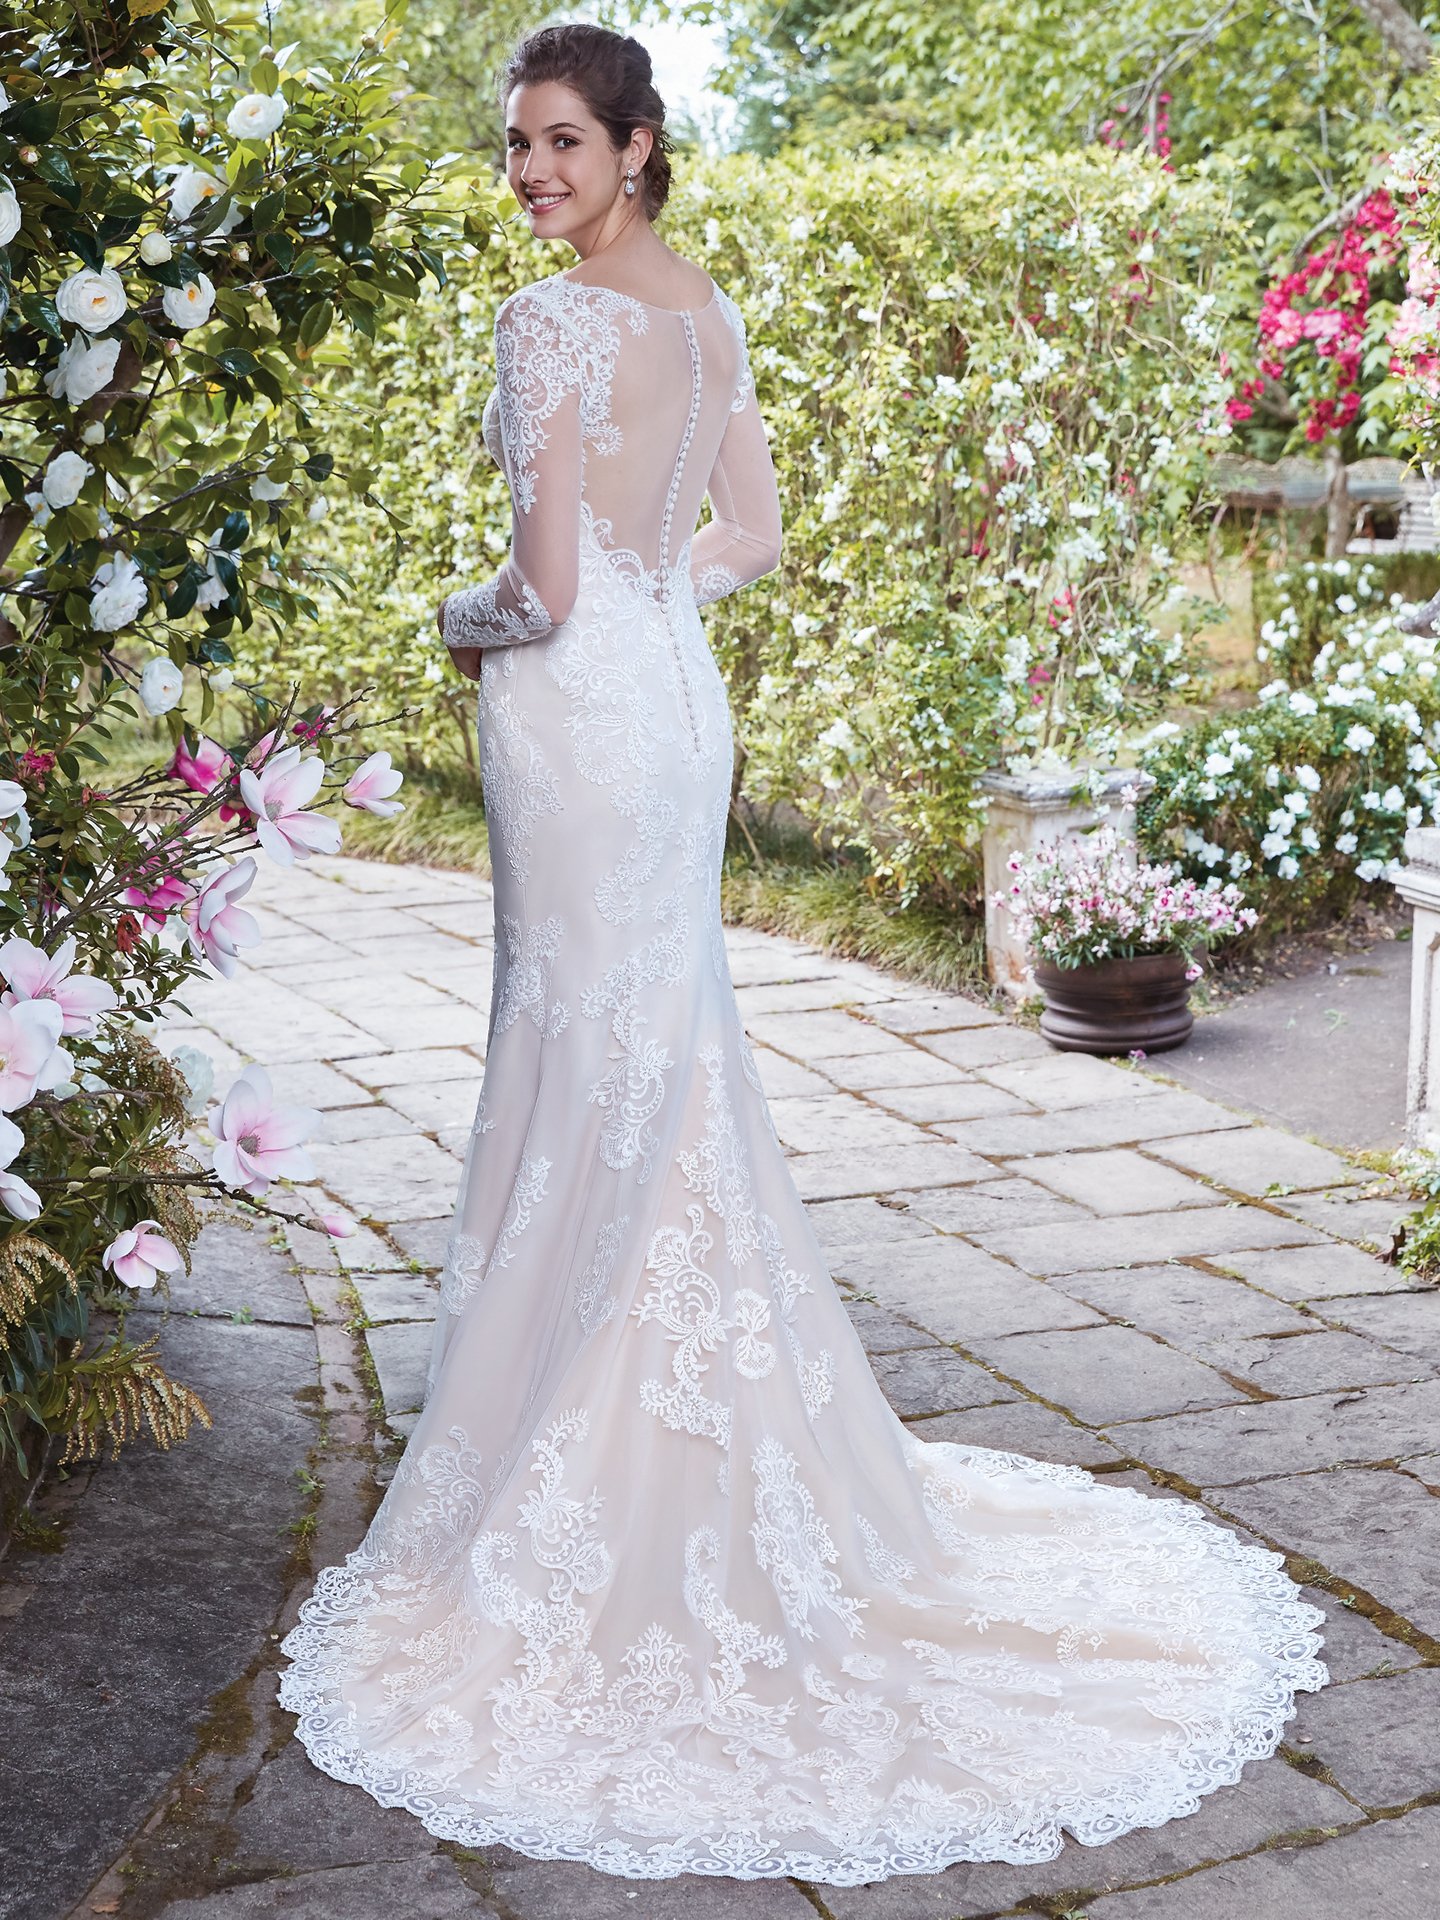 3 Beautiful Dresses for 3 Budget Weddings - Sigrid wedding dress by Rebecca Ingram